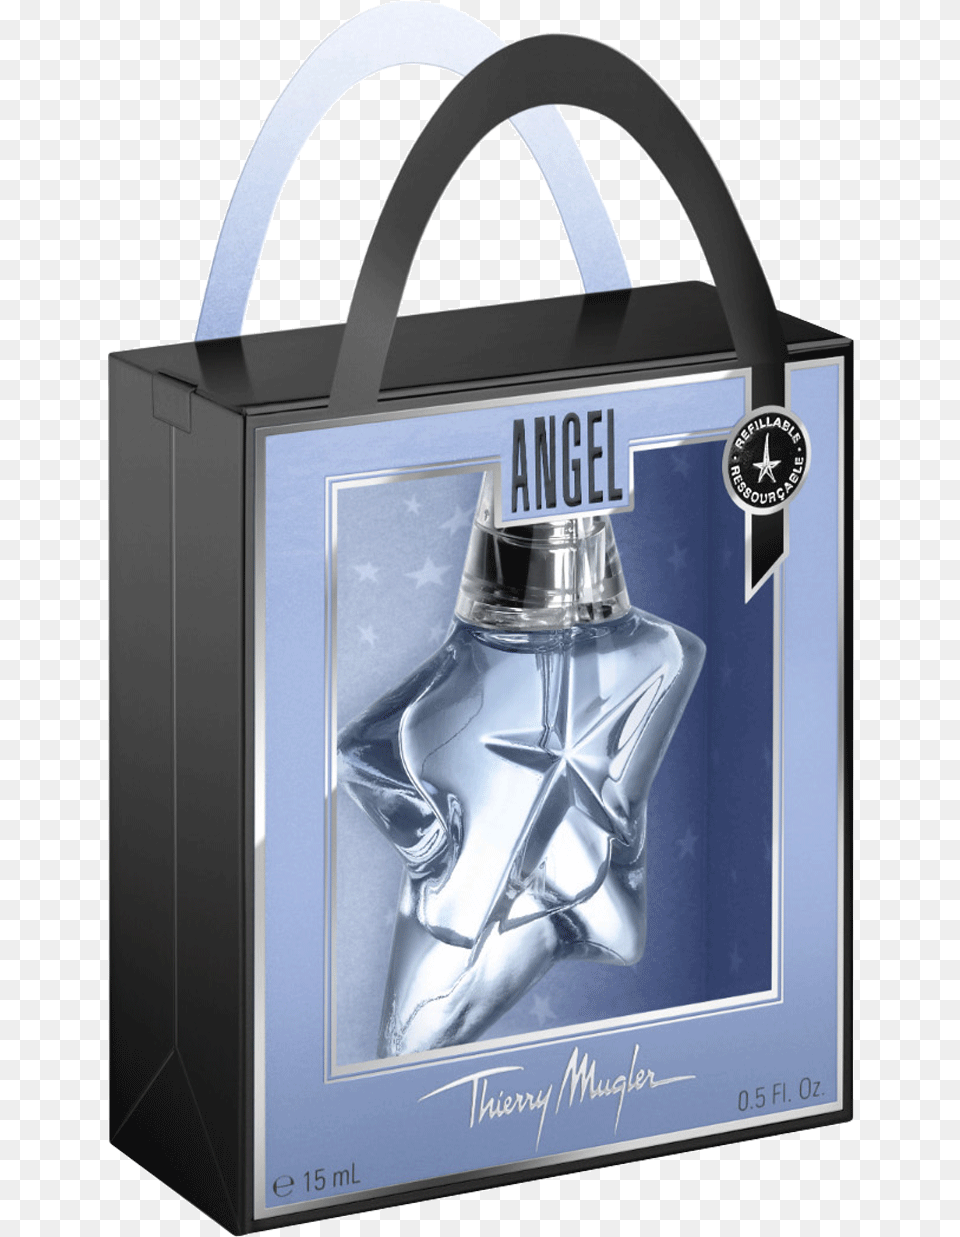 Angel Seducing Offer Thierry Mugler Angel 15ml Refillable Edp Spray, Bag, Bottle, Accessories, Handbag Free Transparent Png